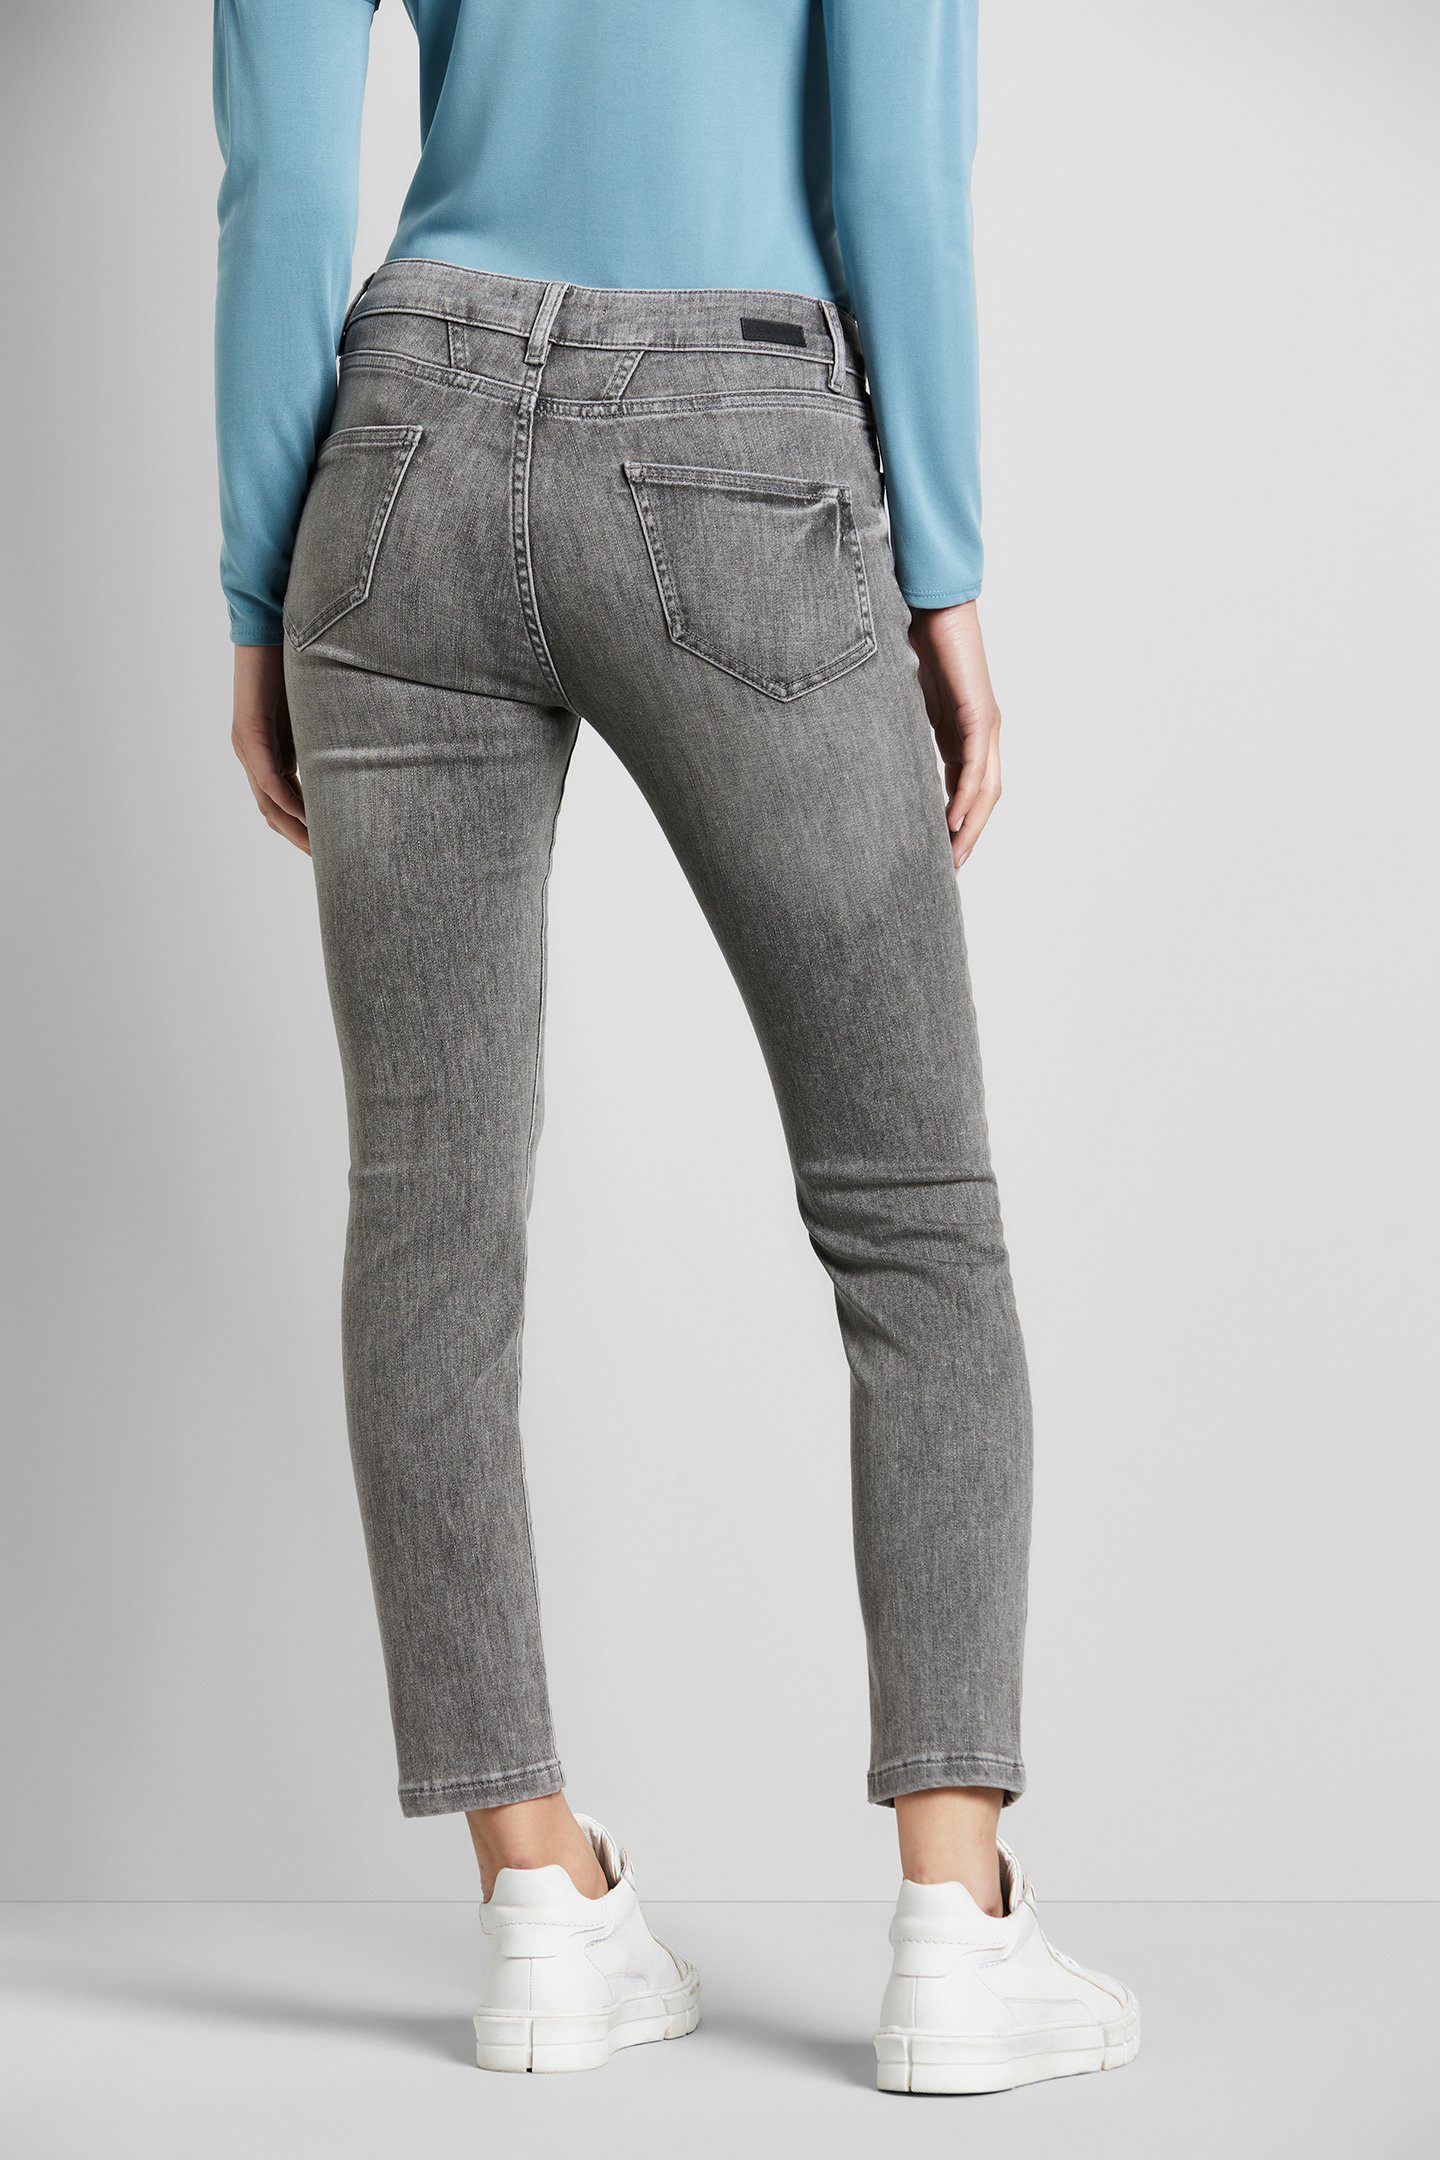 bugatti 5-Pocket-Jeans leichte Used-Waschung grau